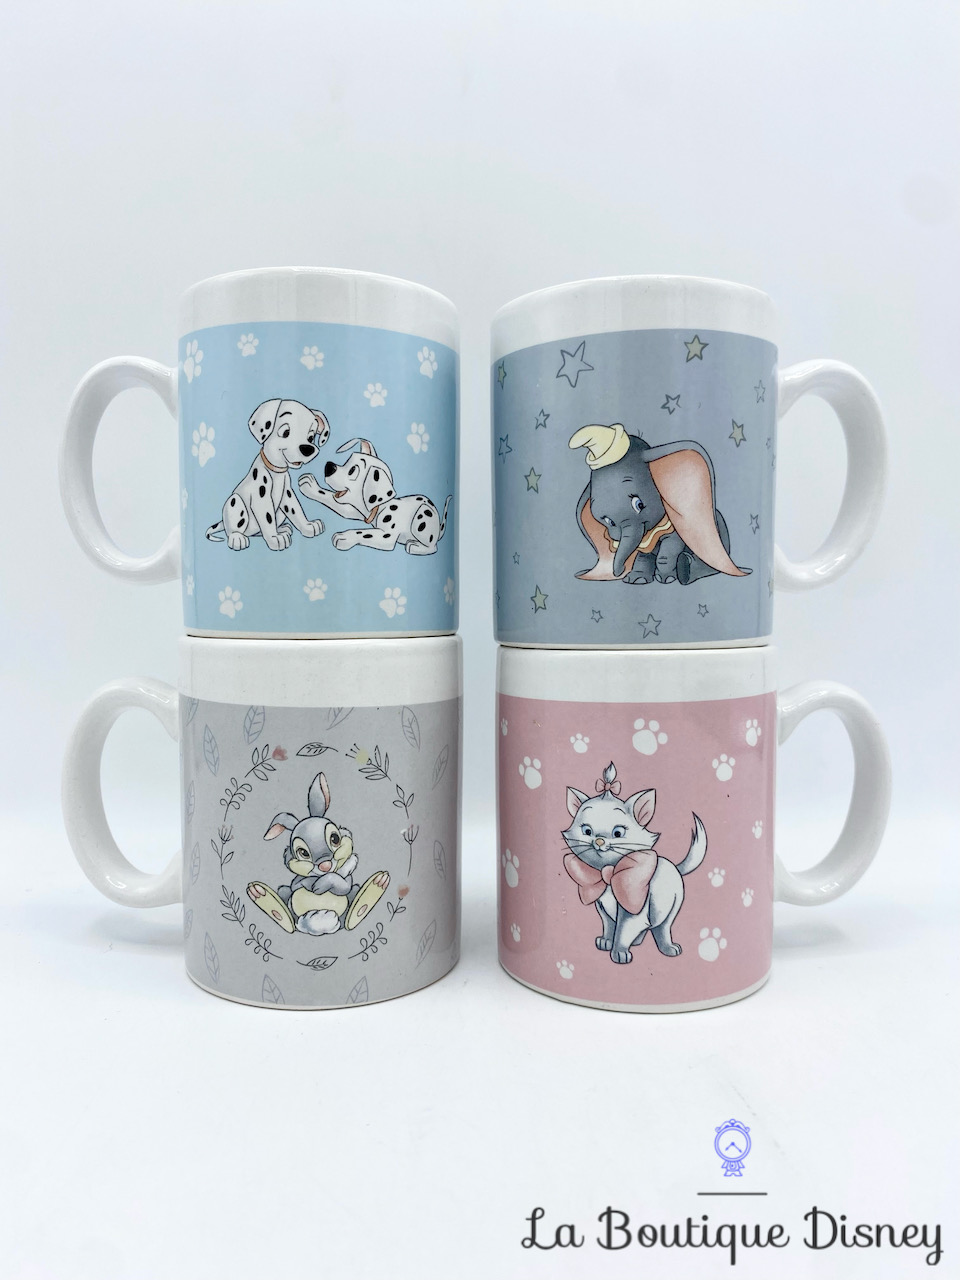 Set Mini Tasses Animaux Disney 2017 mug expresso 101 Dalmatiens Dumbo Panpan Marie